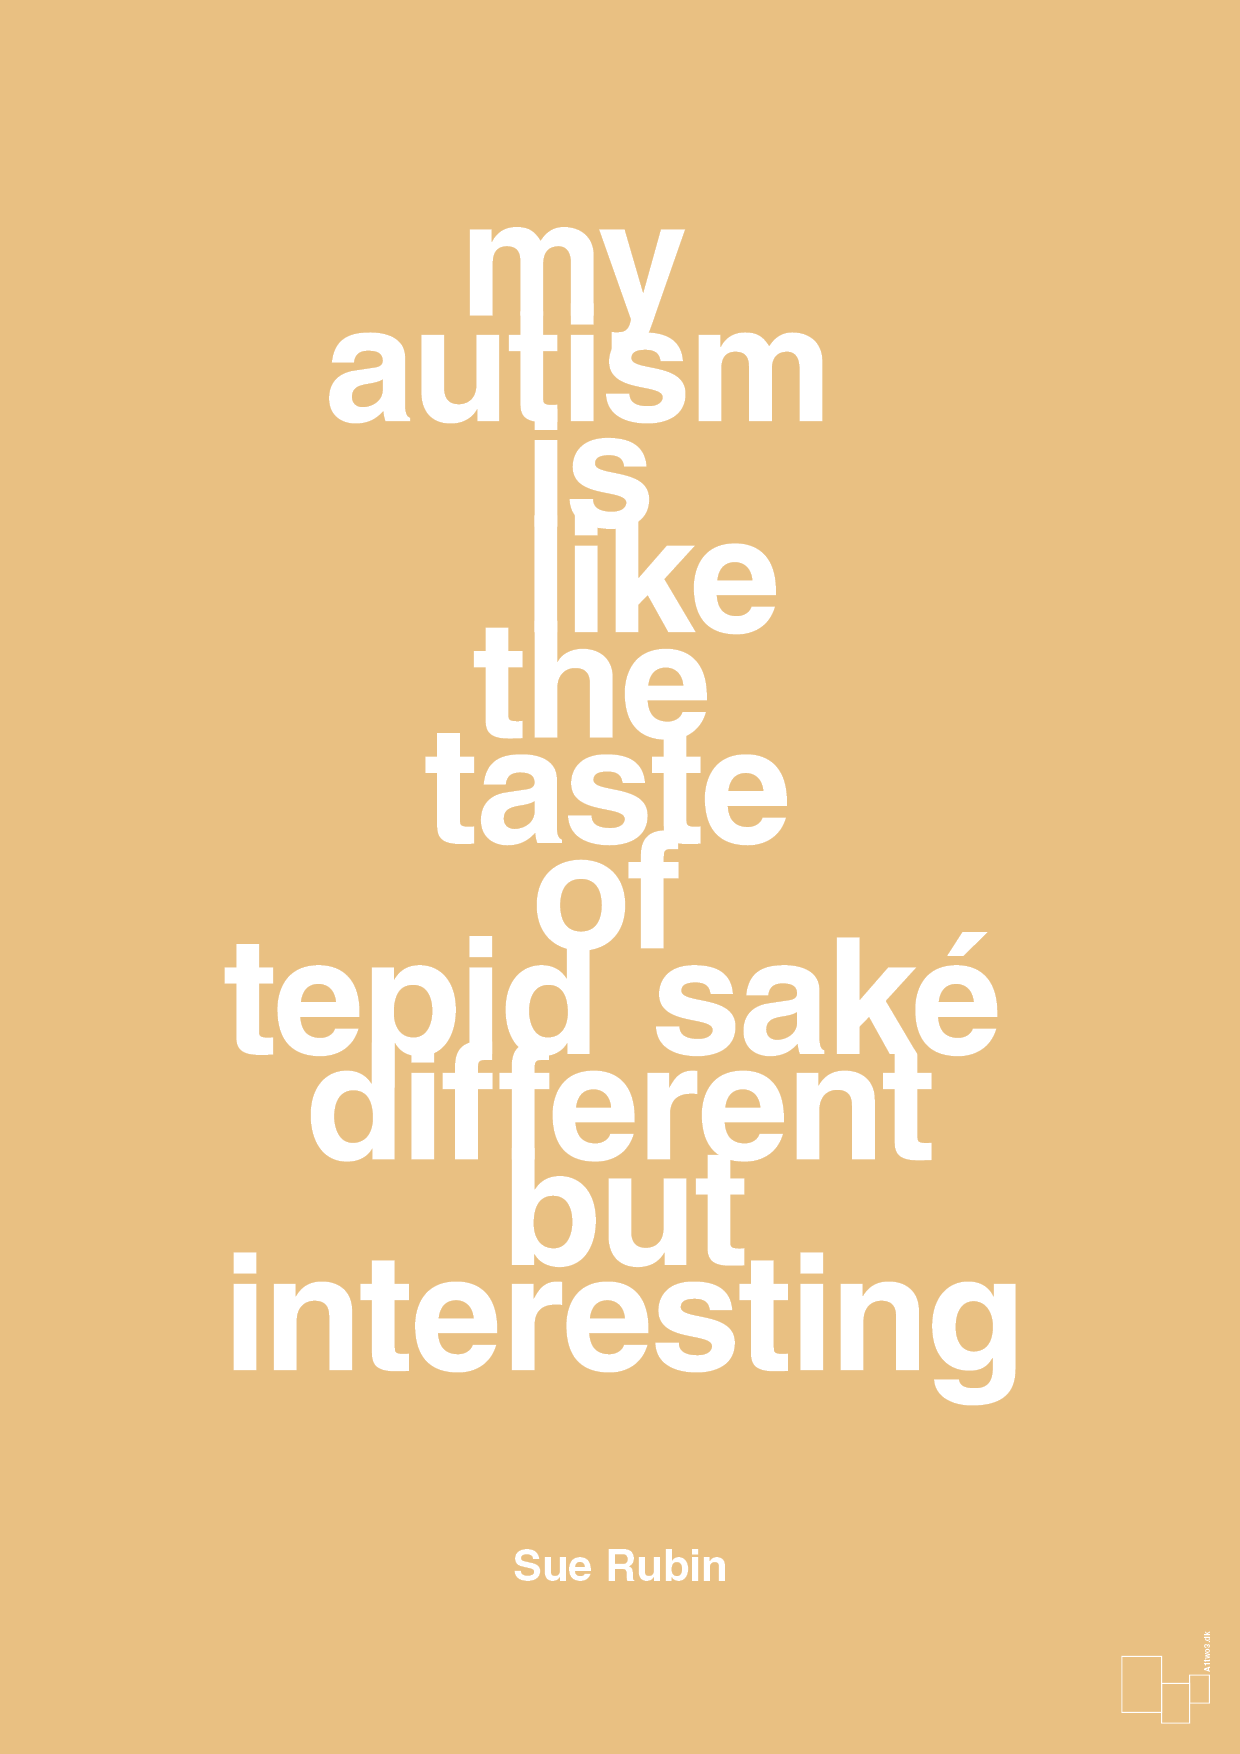 my autism is like the taste of tepid saké different but interesting - Plakat med Samfund i Charismatic